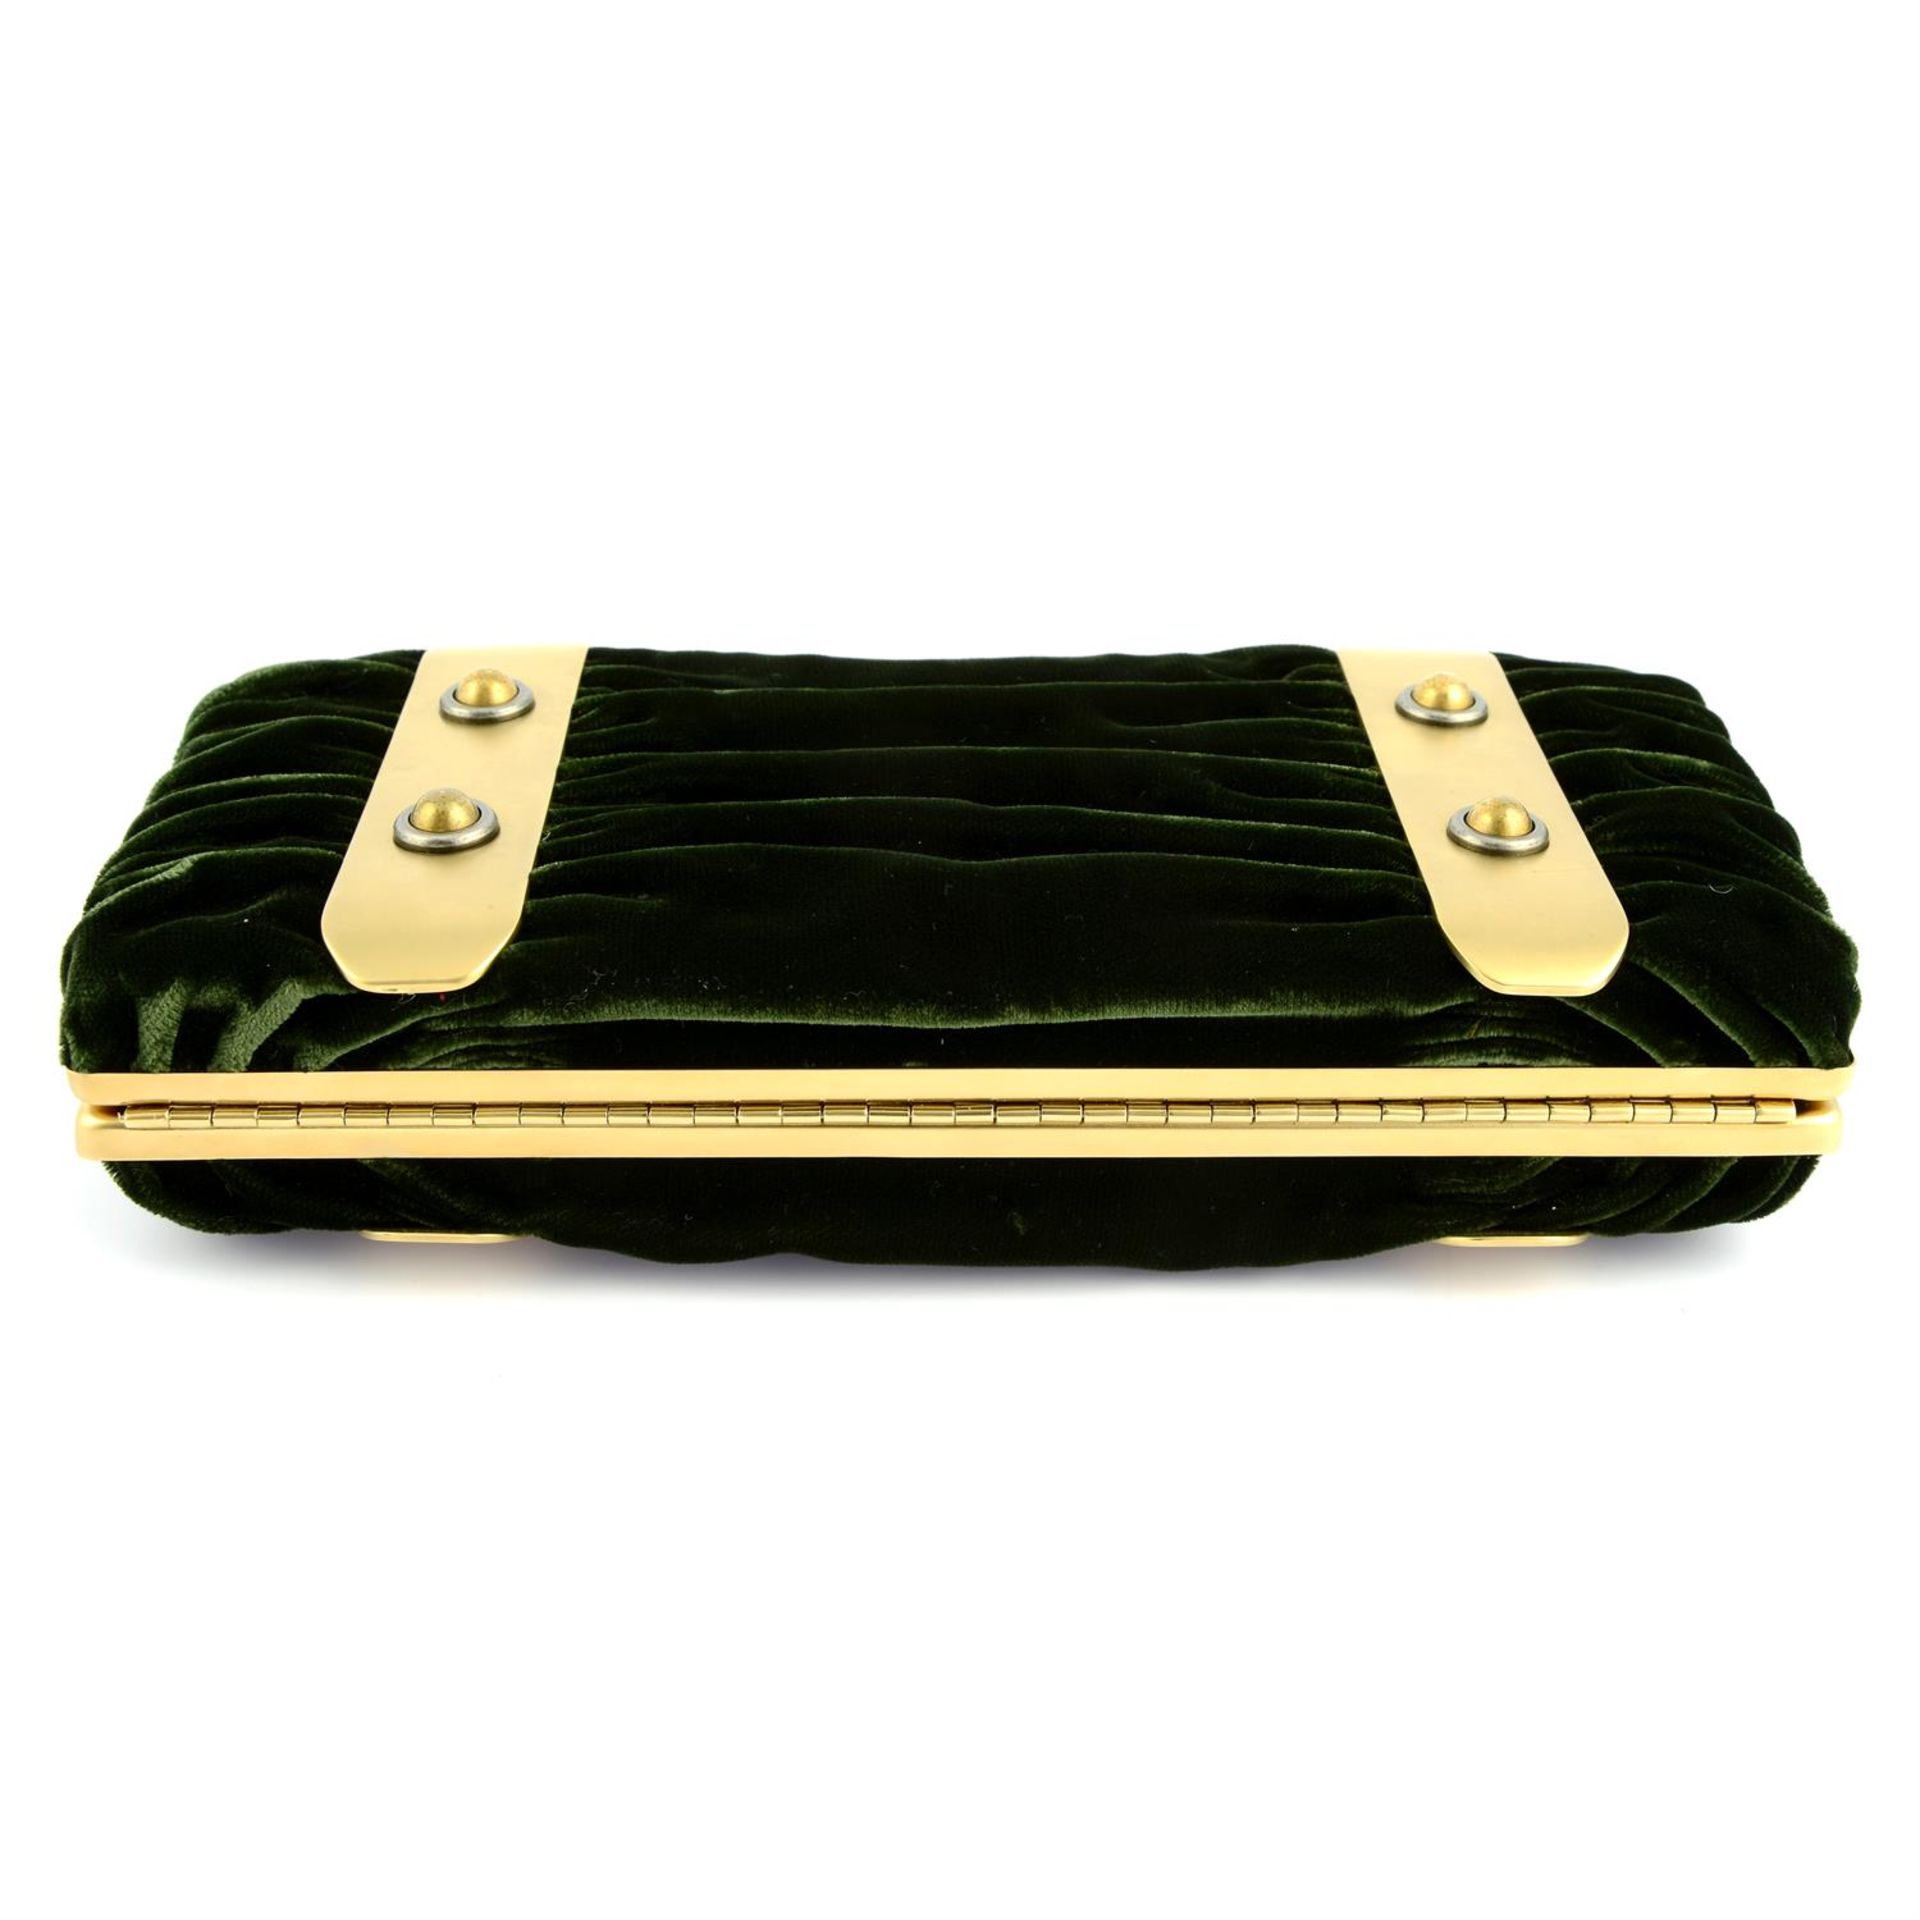 STELLA MCCARTNEY - a green velvet clutch. - Image 4 of 5